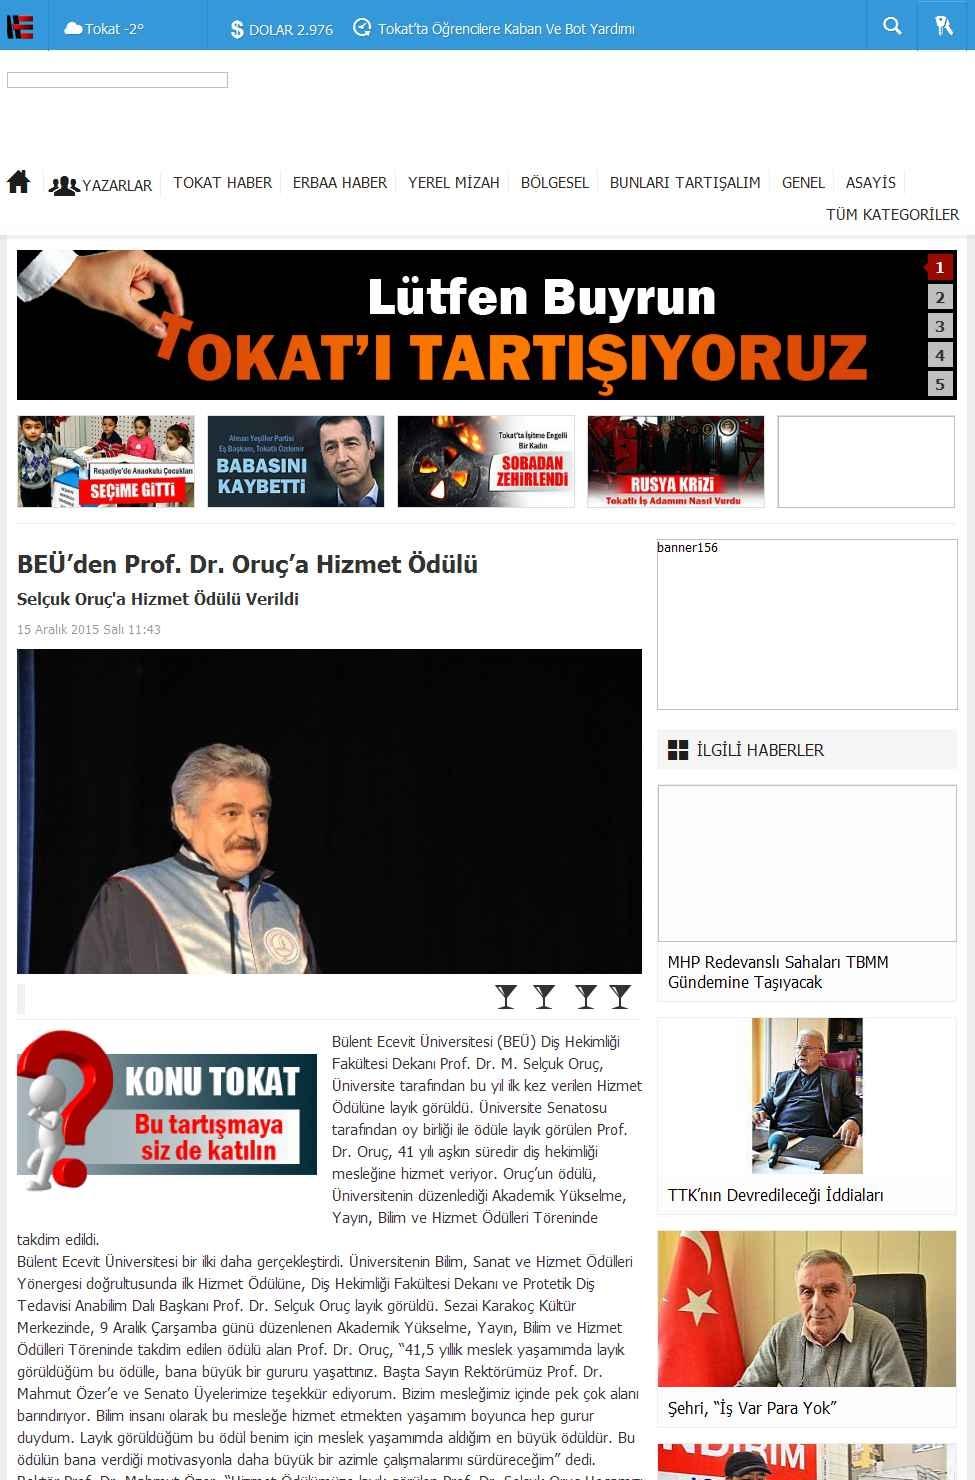 Portal Adres BEÜ DEN PROF. DR. ORUÇ A HIZMET ÖDÜLÜ : www.erbaadan.